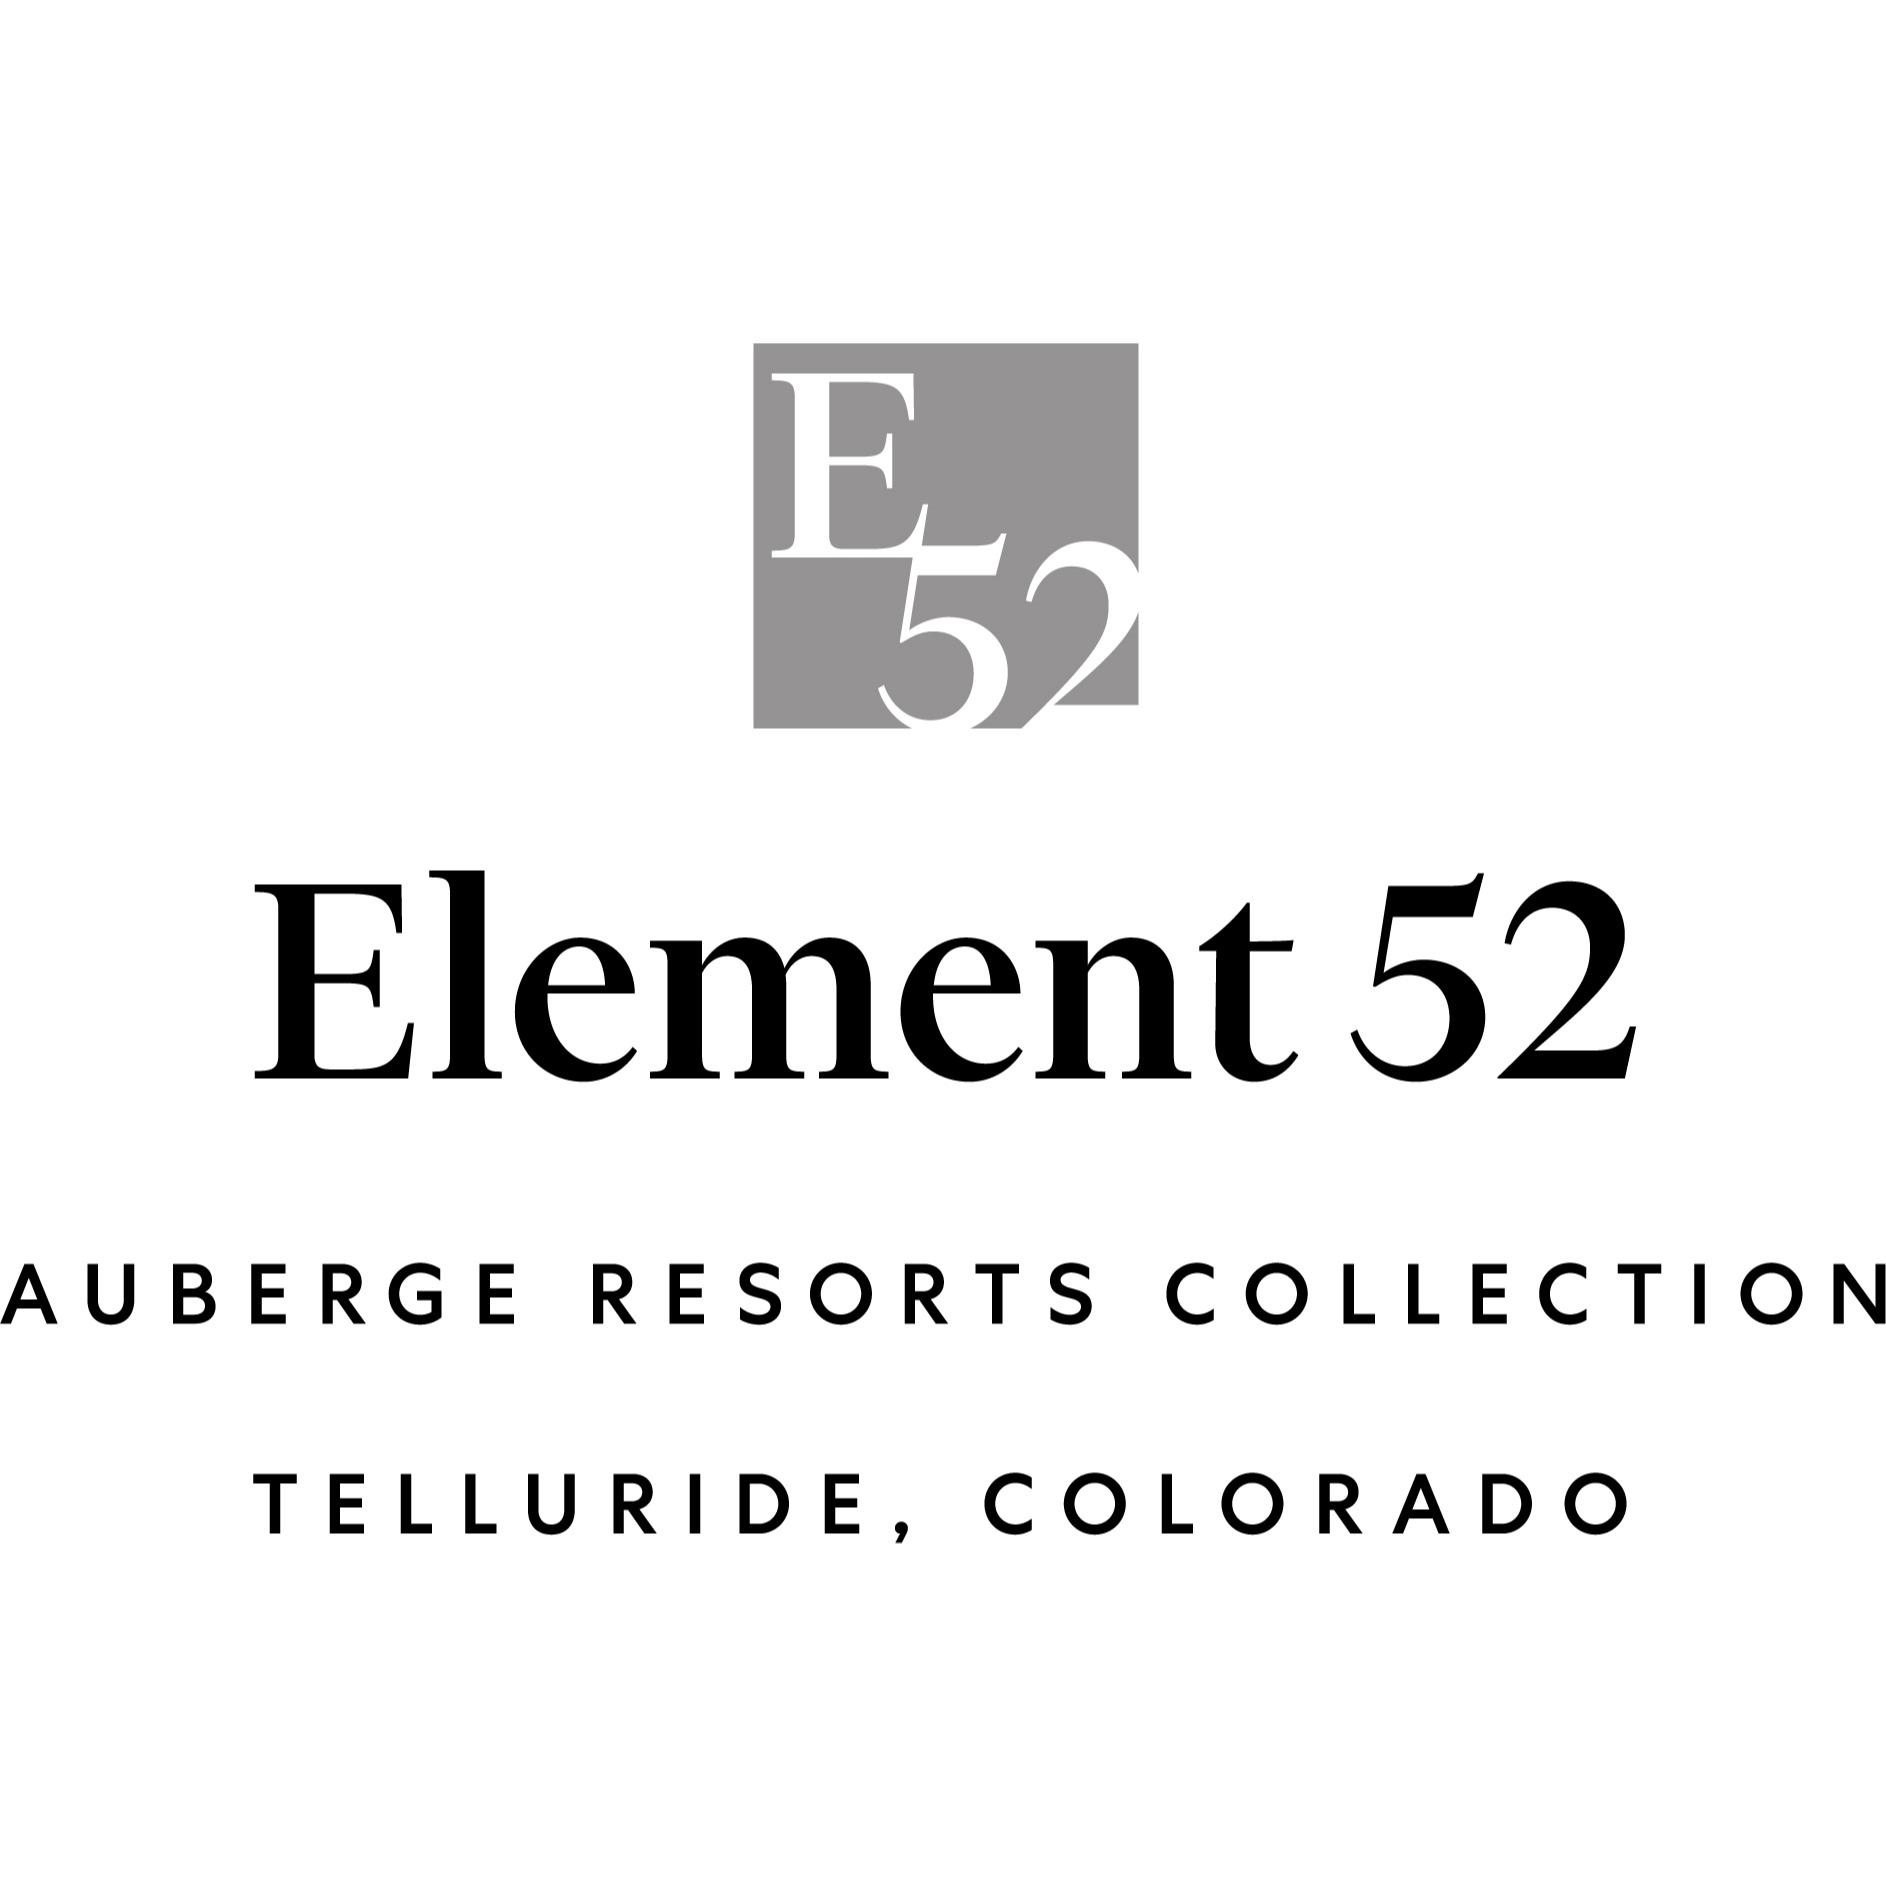 Element 52, Auberge Resorts Collection Telluride (970)728-0701